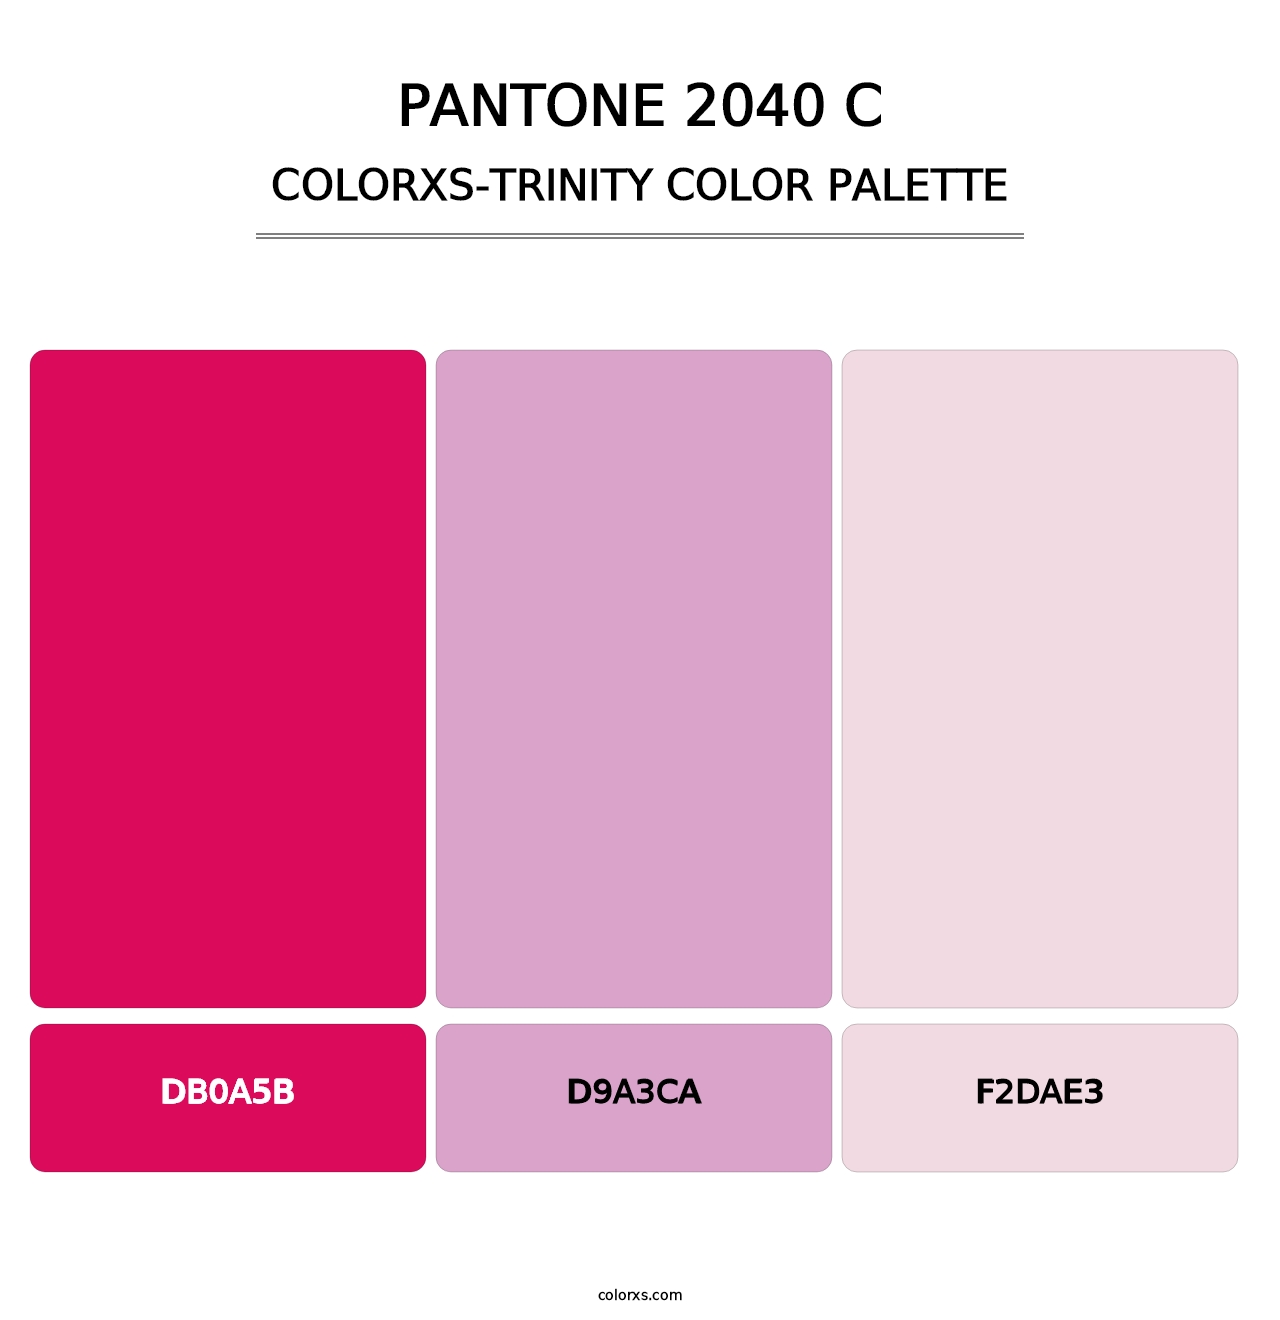 PANTONE 2040 C - Colorxs Trinity Palette